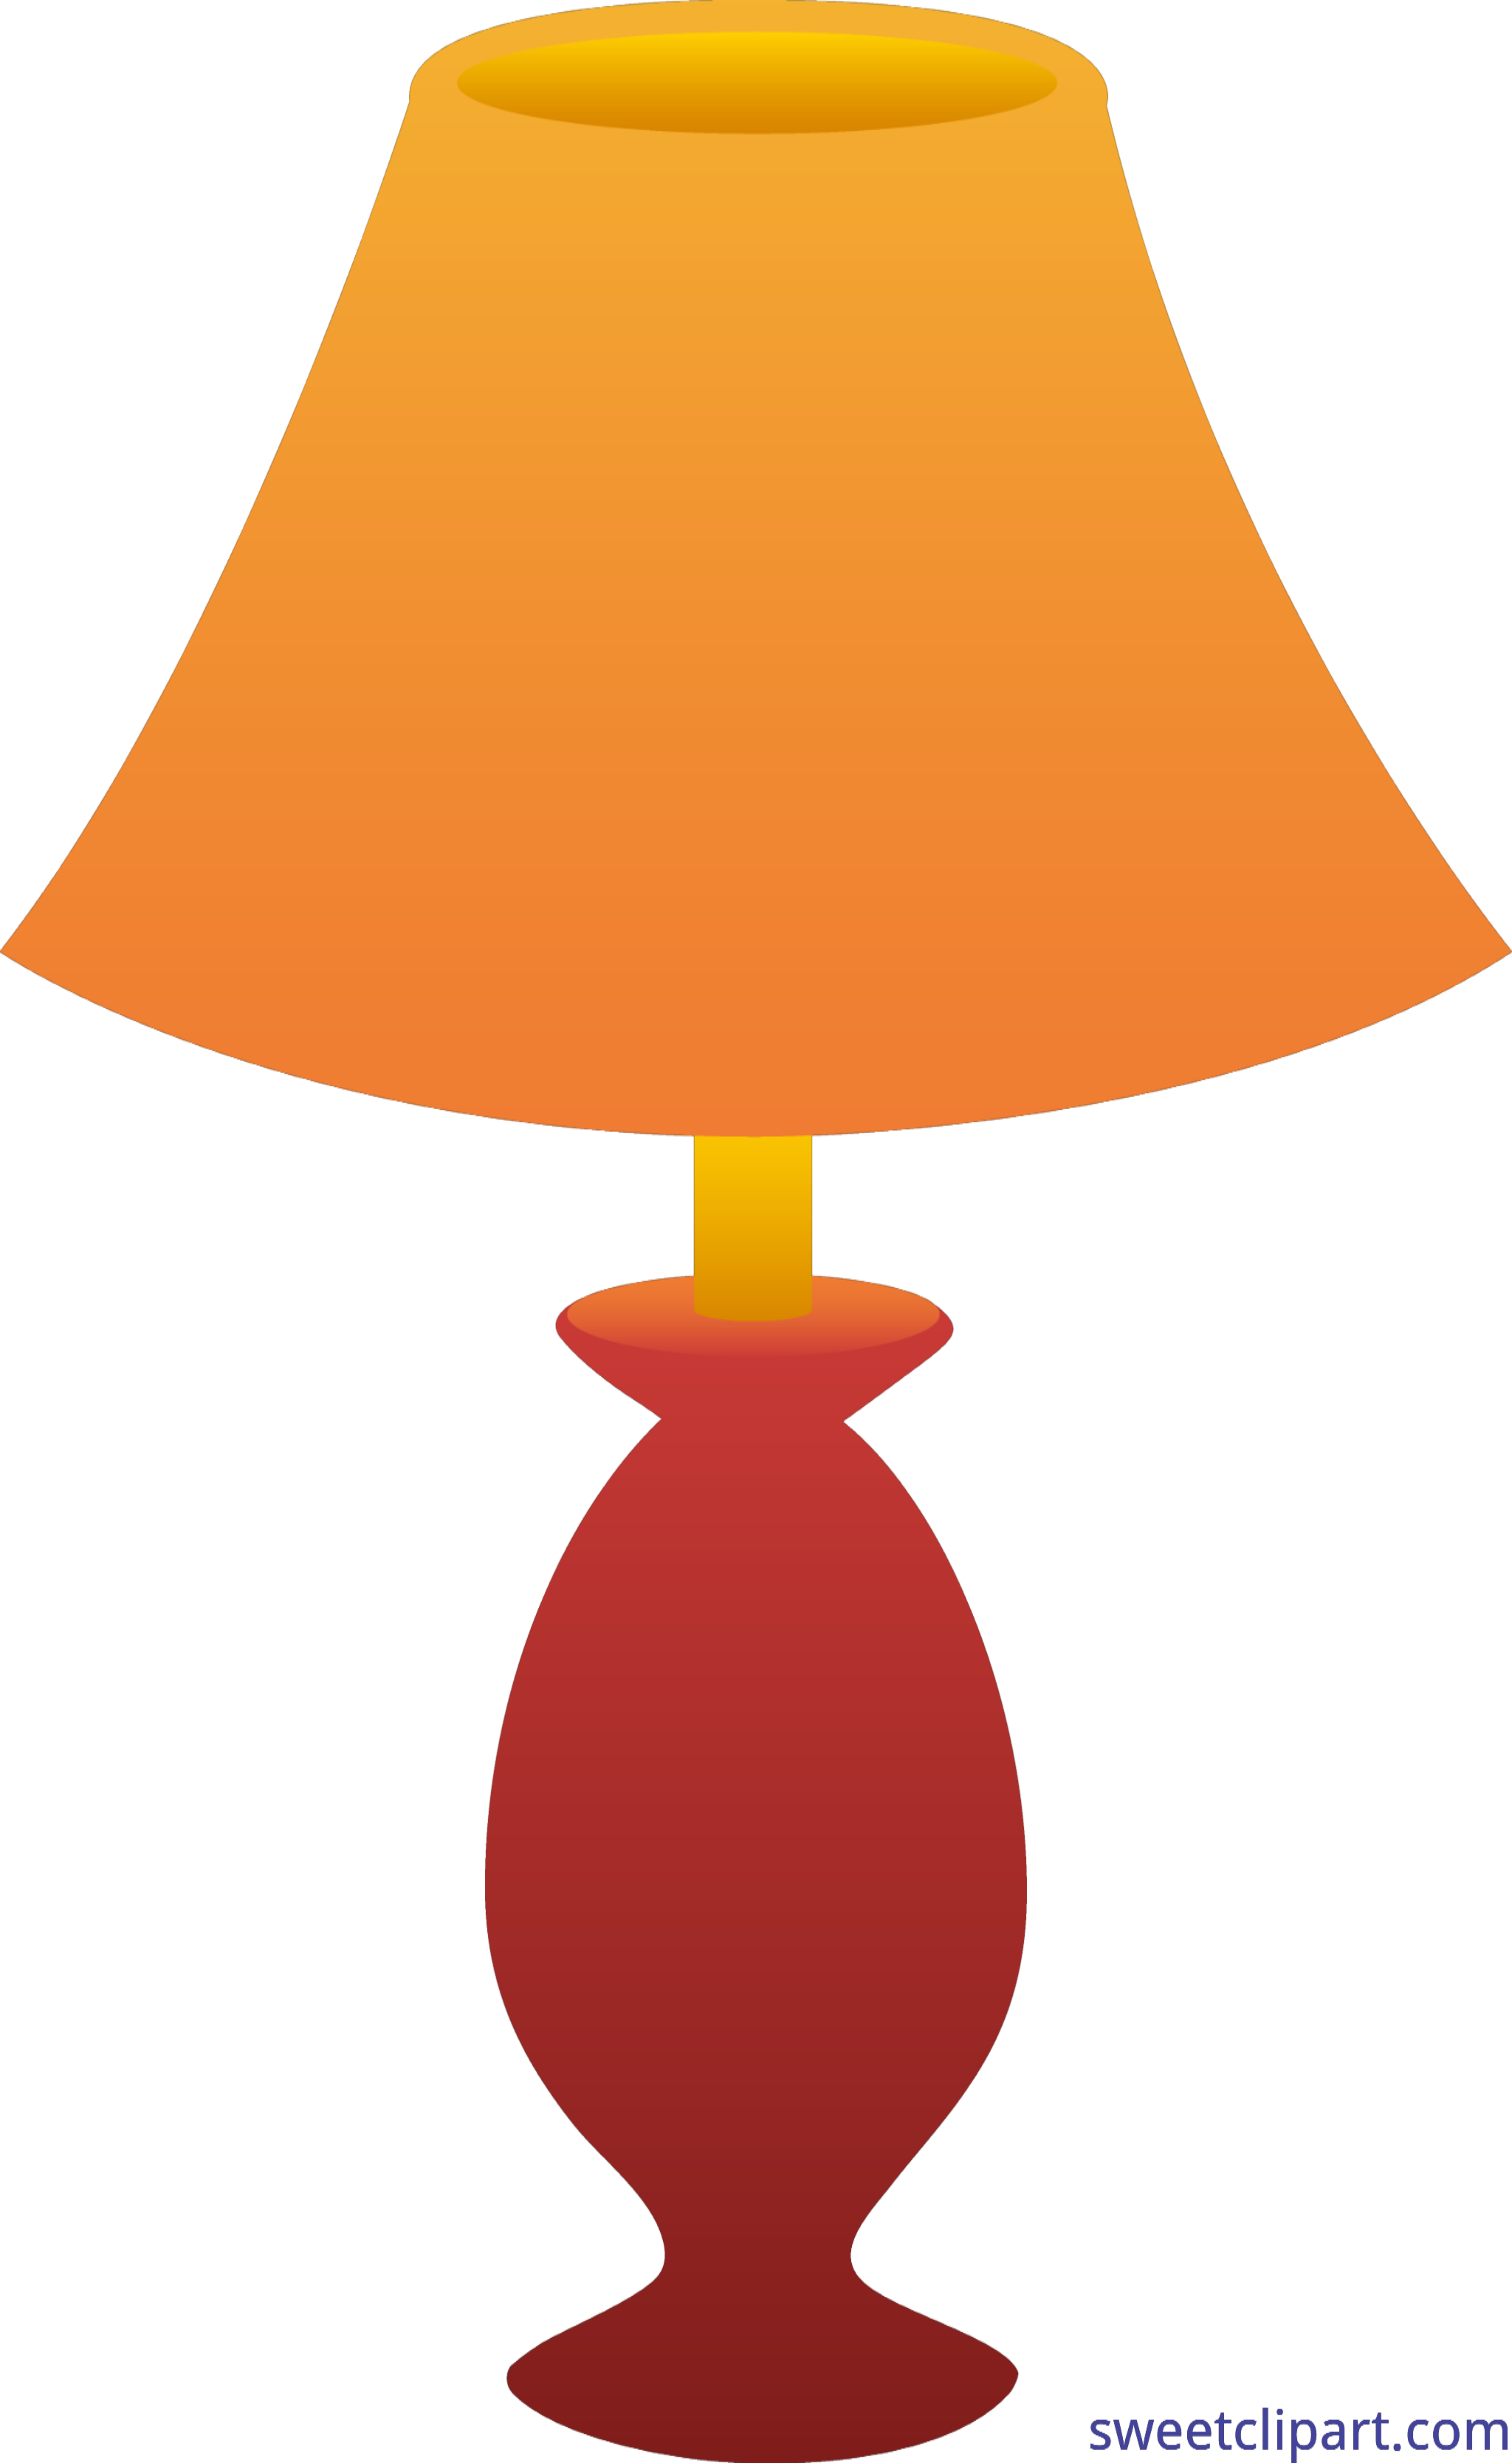 Lamp clipart red orange. Beige clip art sweet